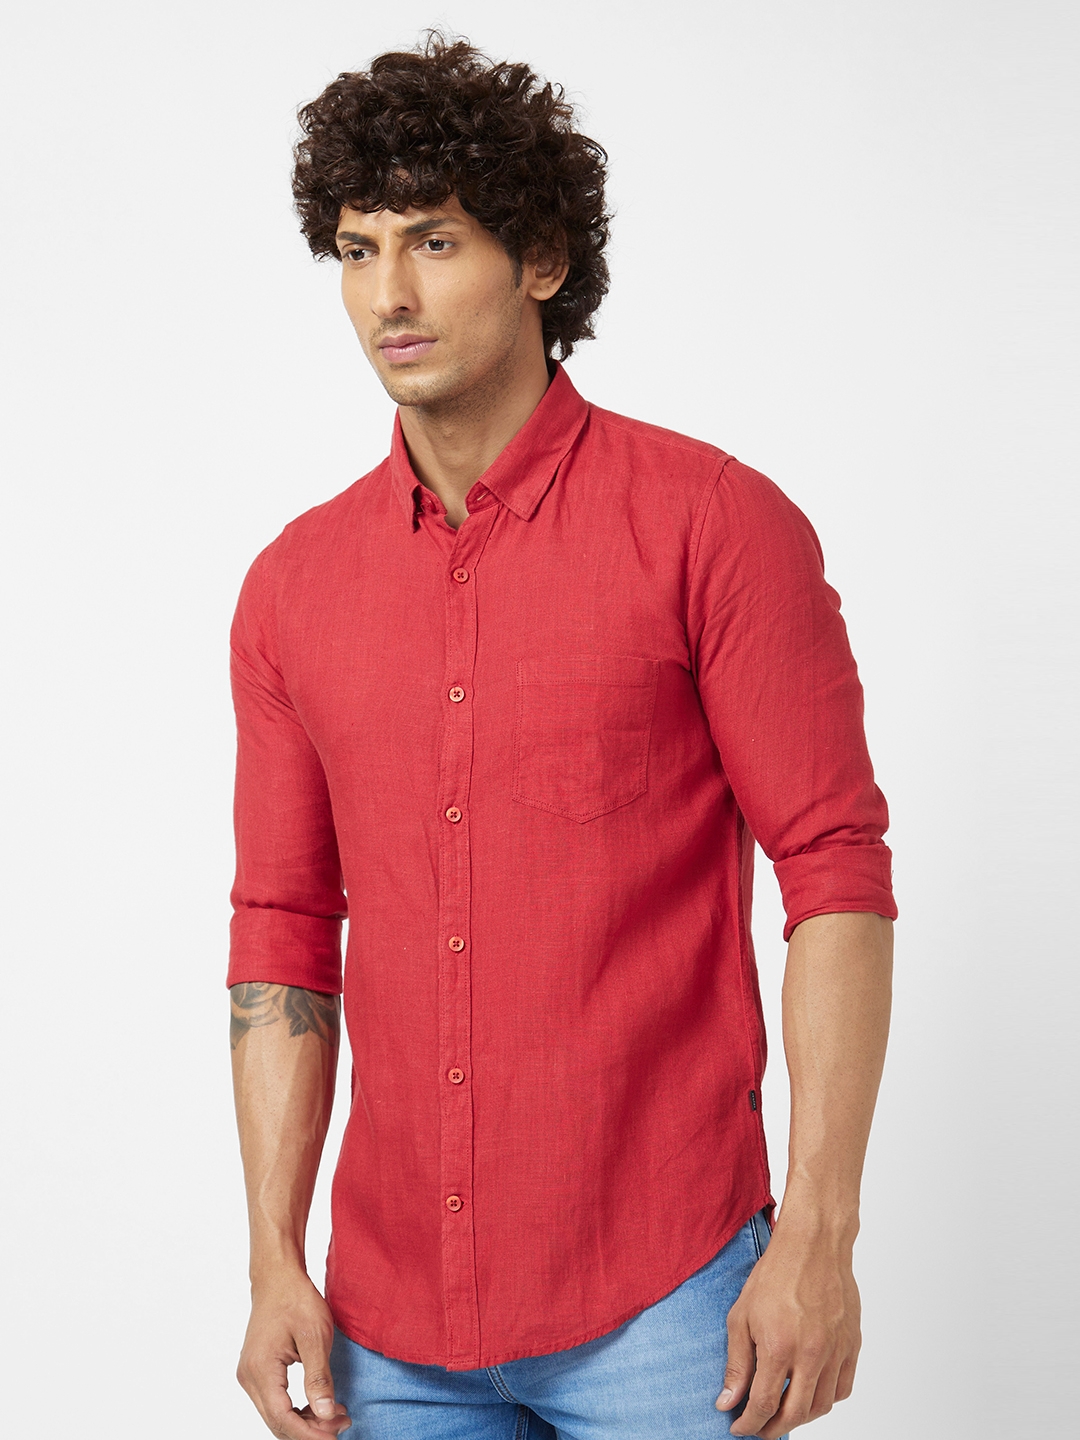 Men's Custom Made to Measure Red/Green Long Sleeve Shirt | Kitenge Store